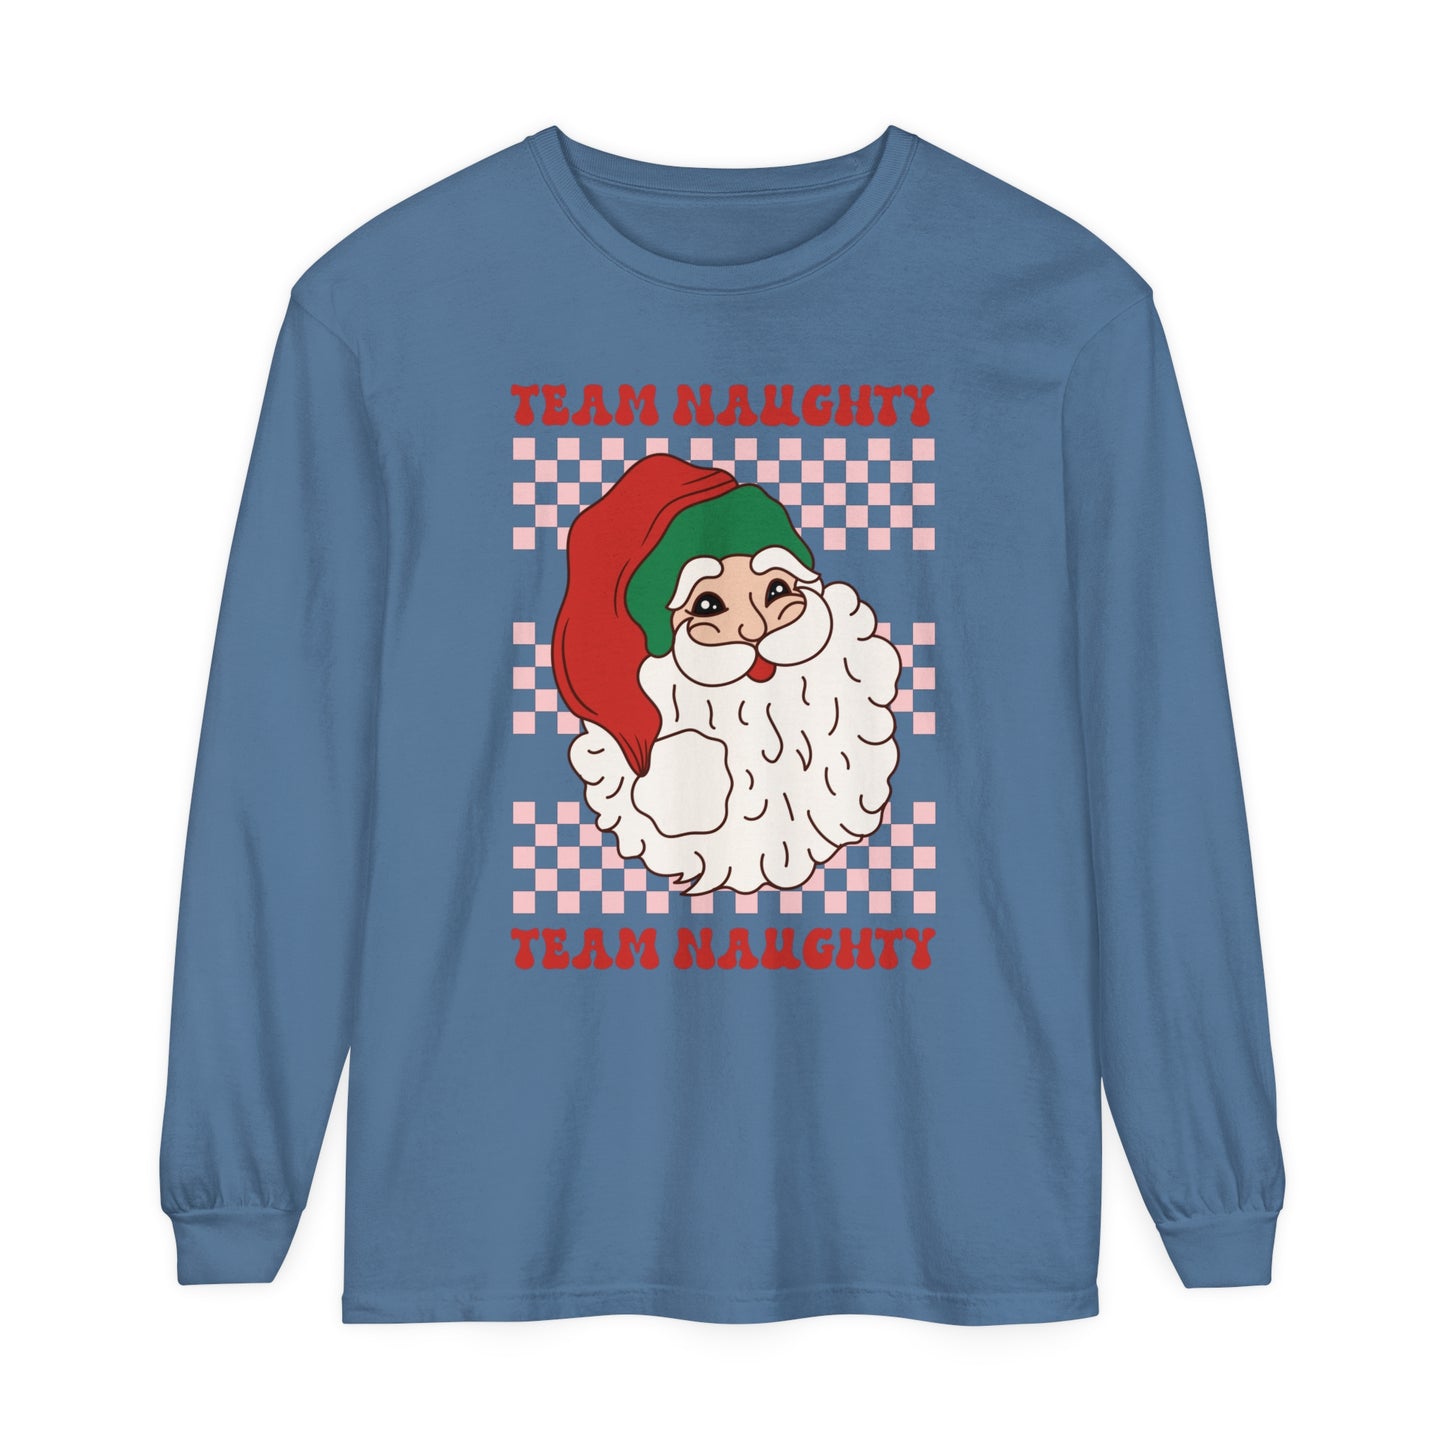 Team Naughty Women's Santa Humor Christmas Holiday Loose Long Sleeve T-Shirt